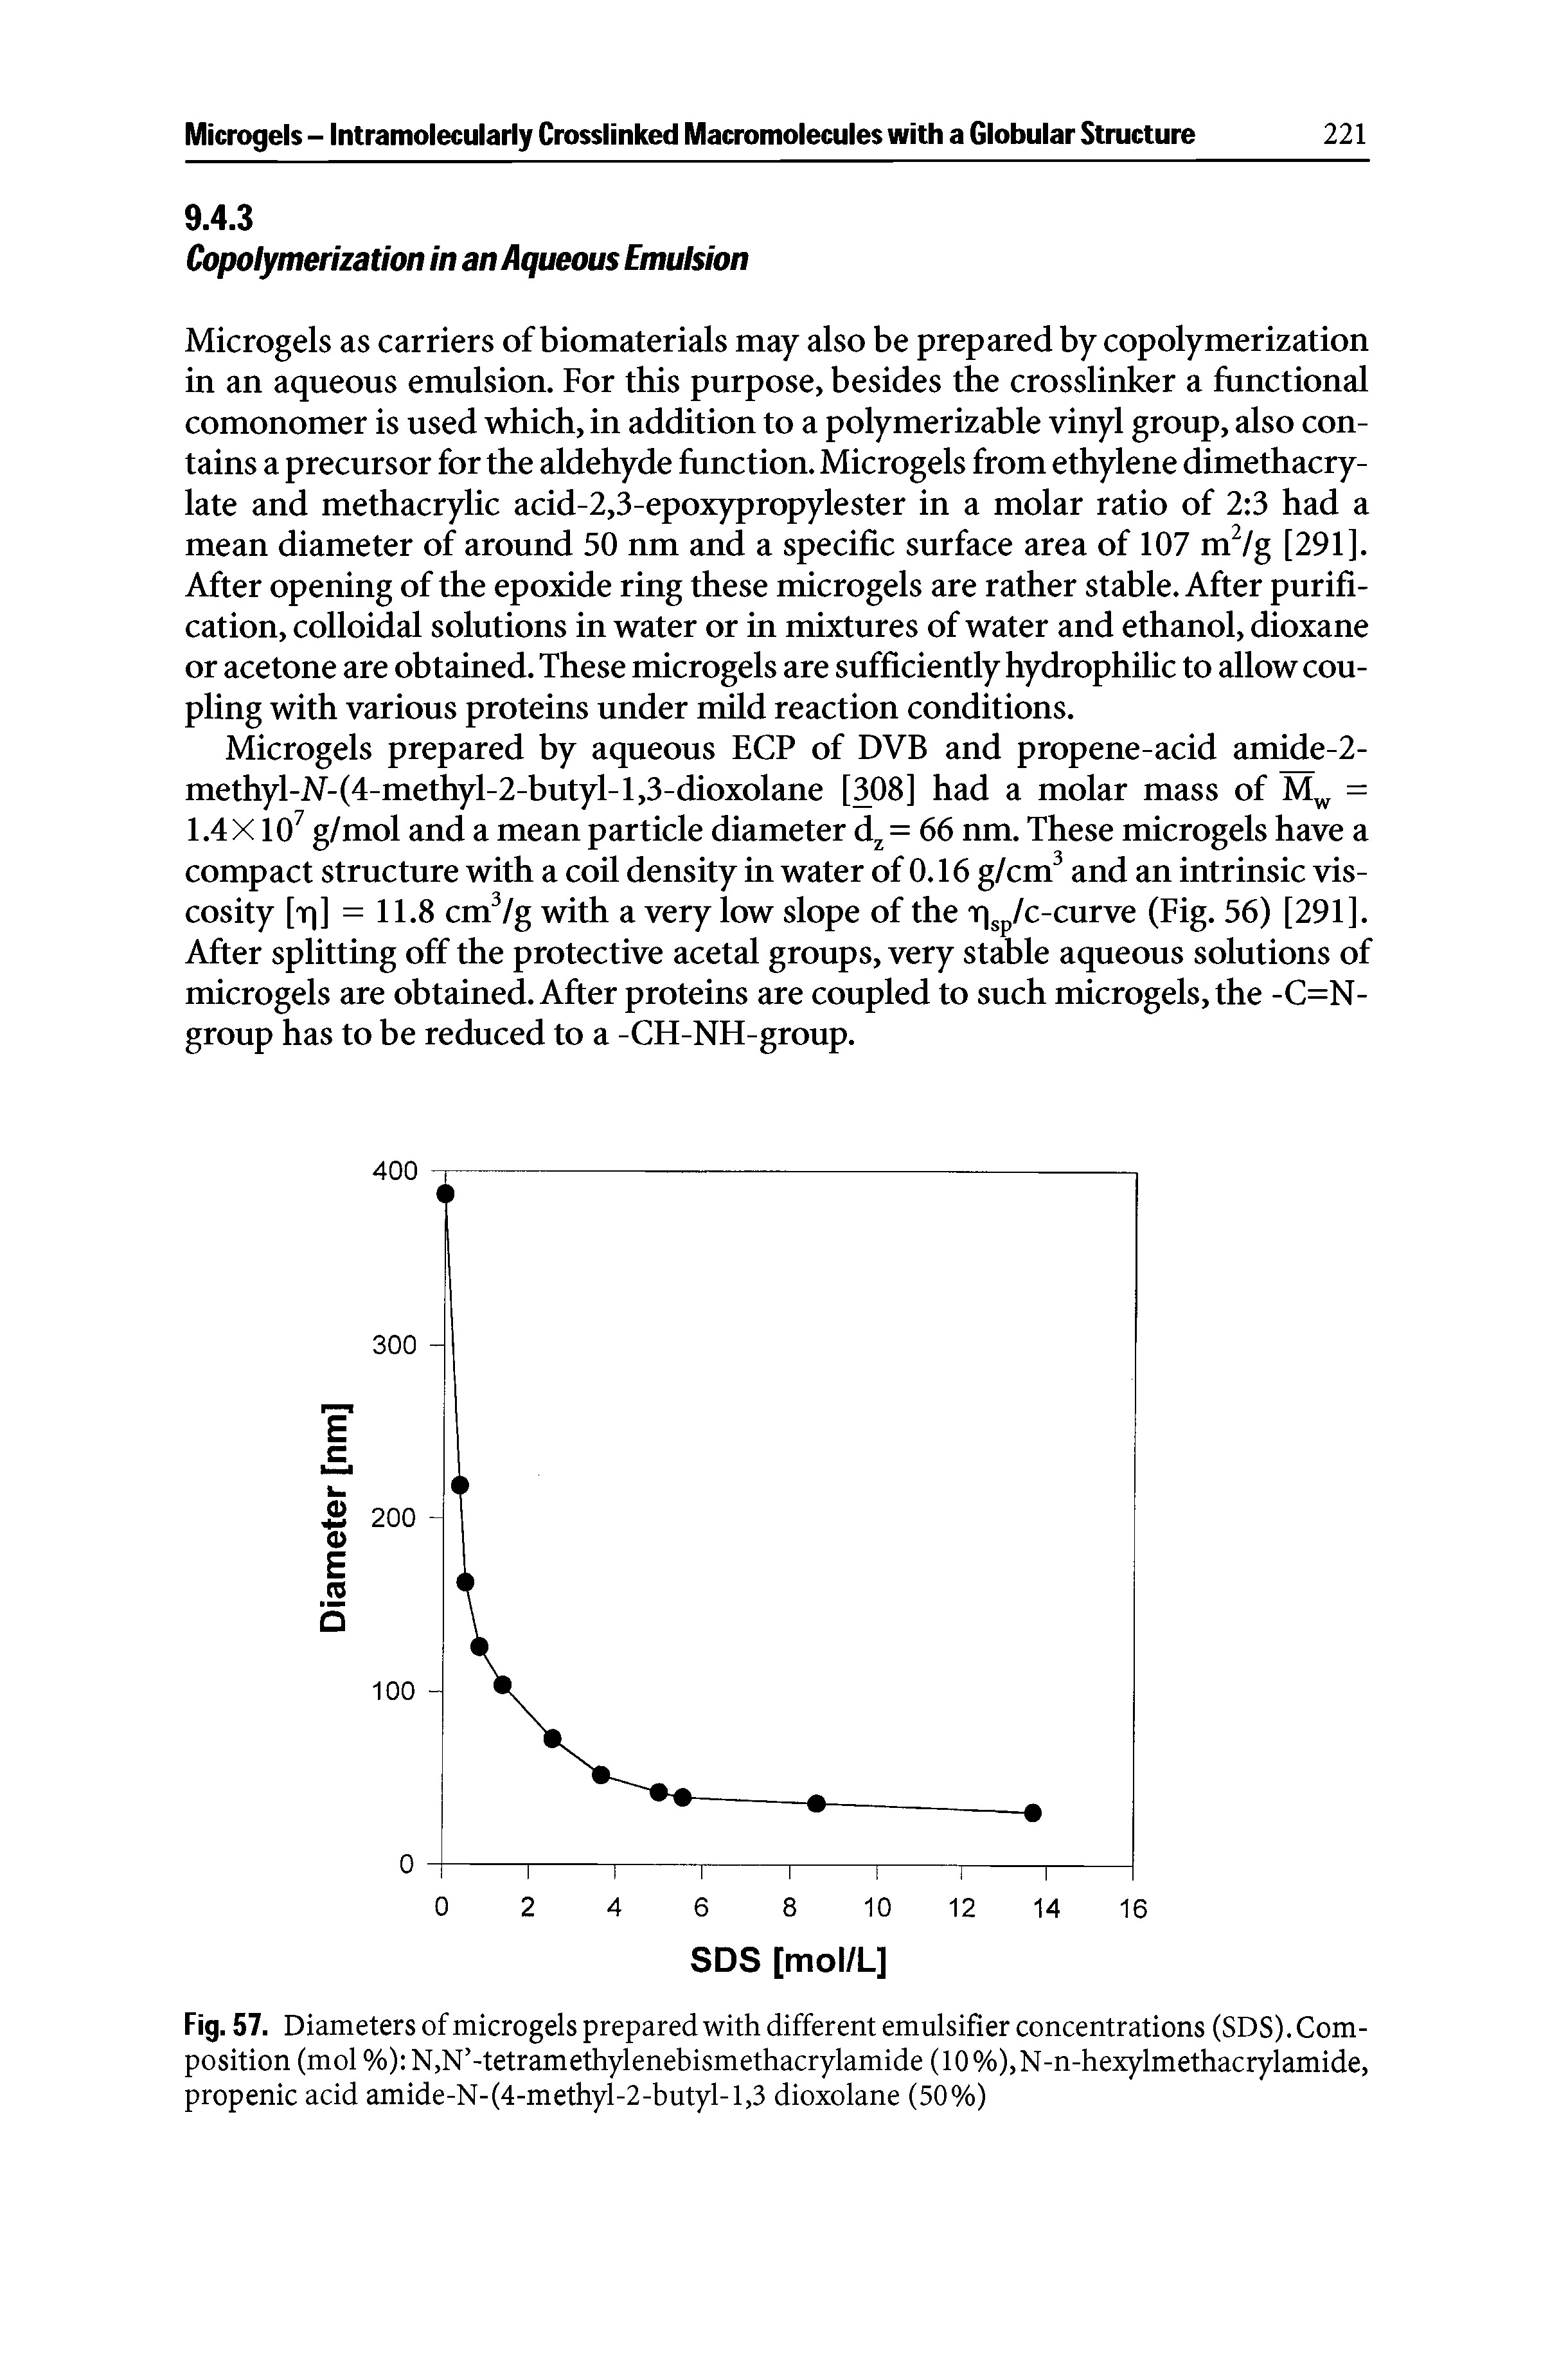 Fig. 57. Diameters of microgels prepared with different emulsifier concentrations (SDS). Composition (mol %) NjN -tetramethylenebismethacrylamide (10%),N-n-hexylmethacrylamide, propenic acid amide-N-(4-methyl-2-butyl-l,3 dioxolane (50%)...